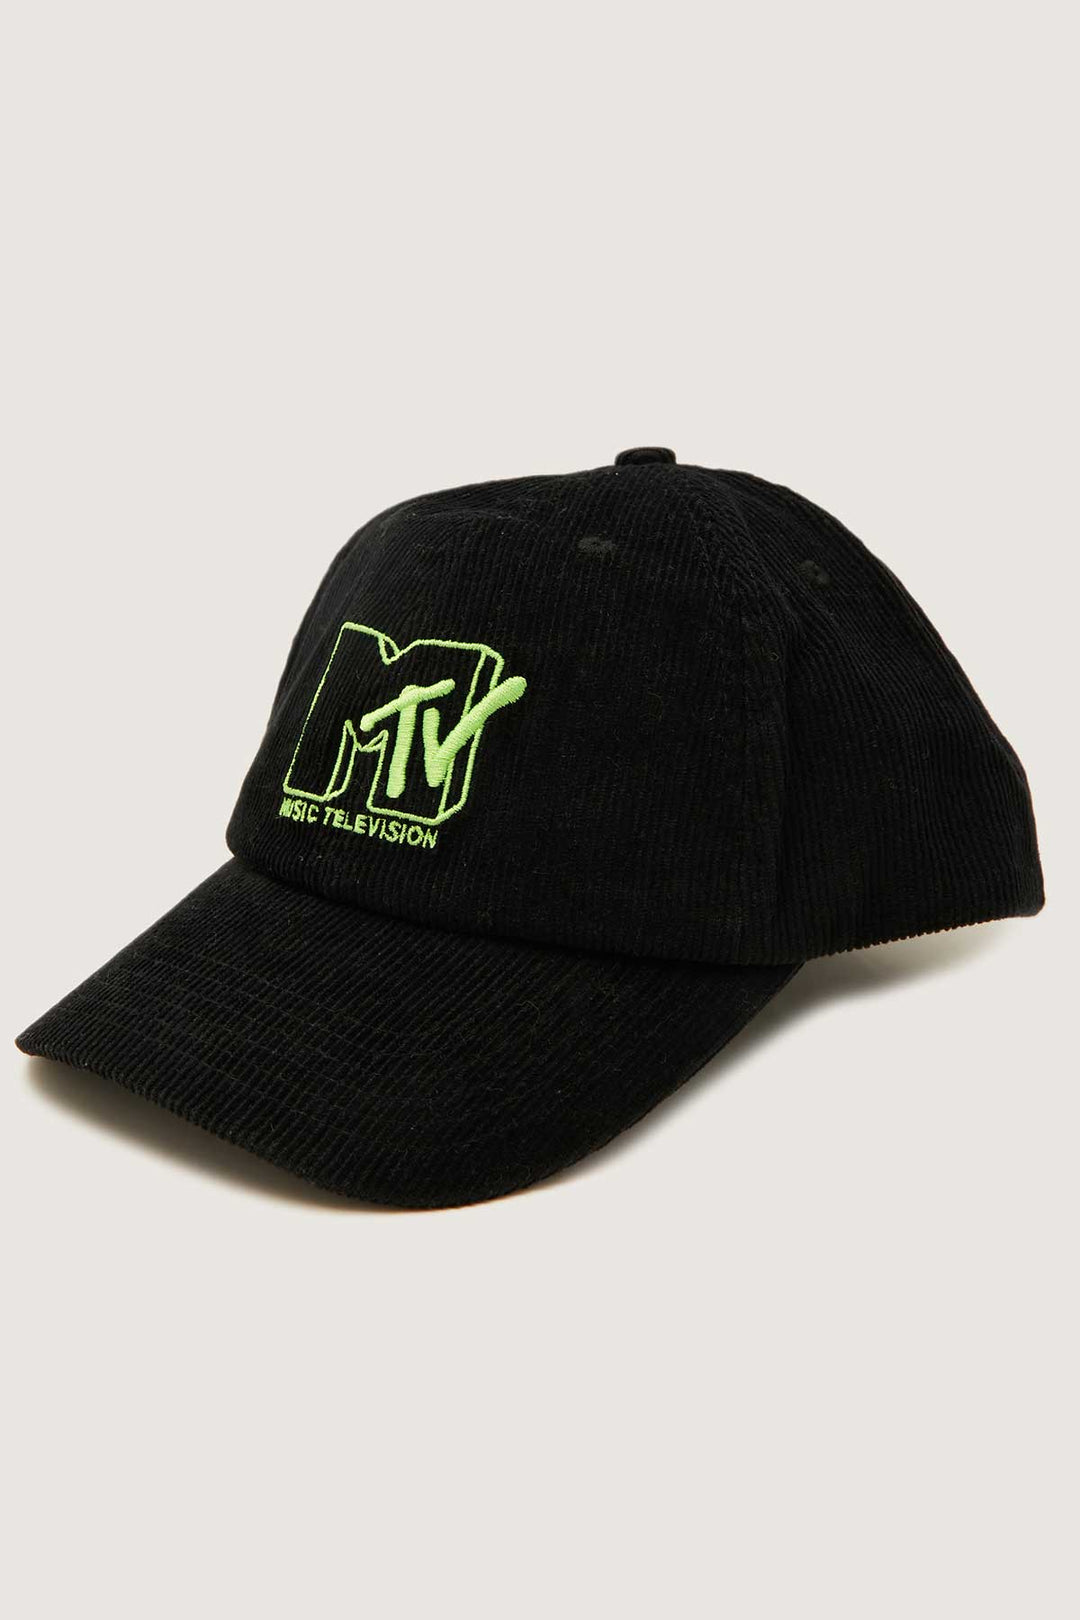 MTV Black Cord Cap - Black Cord